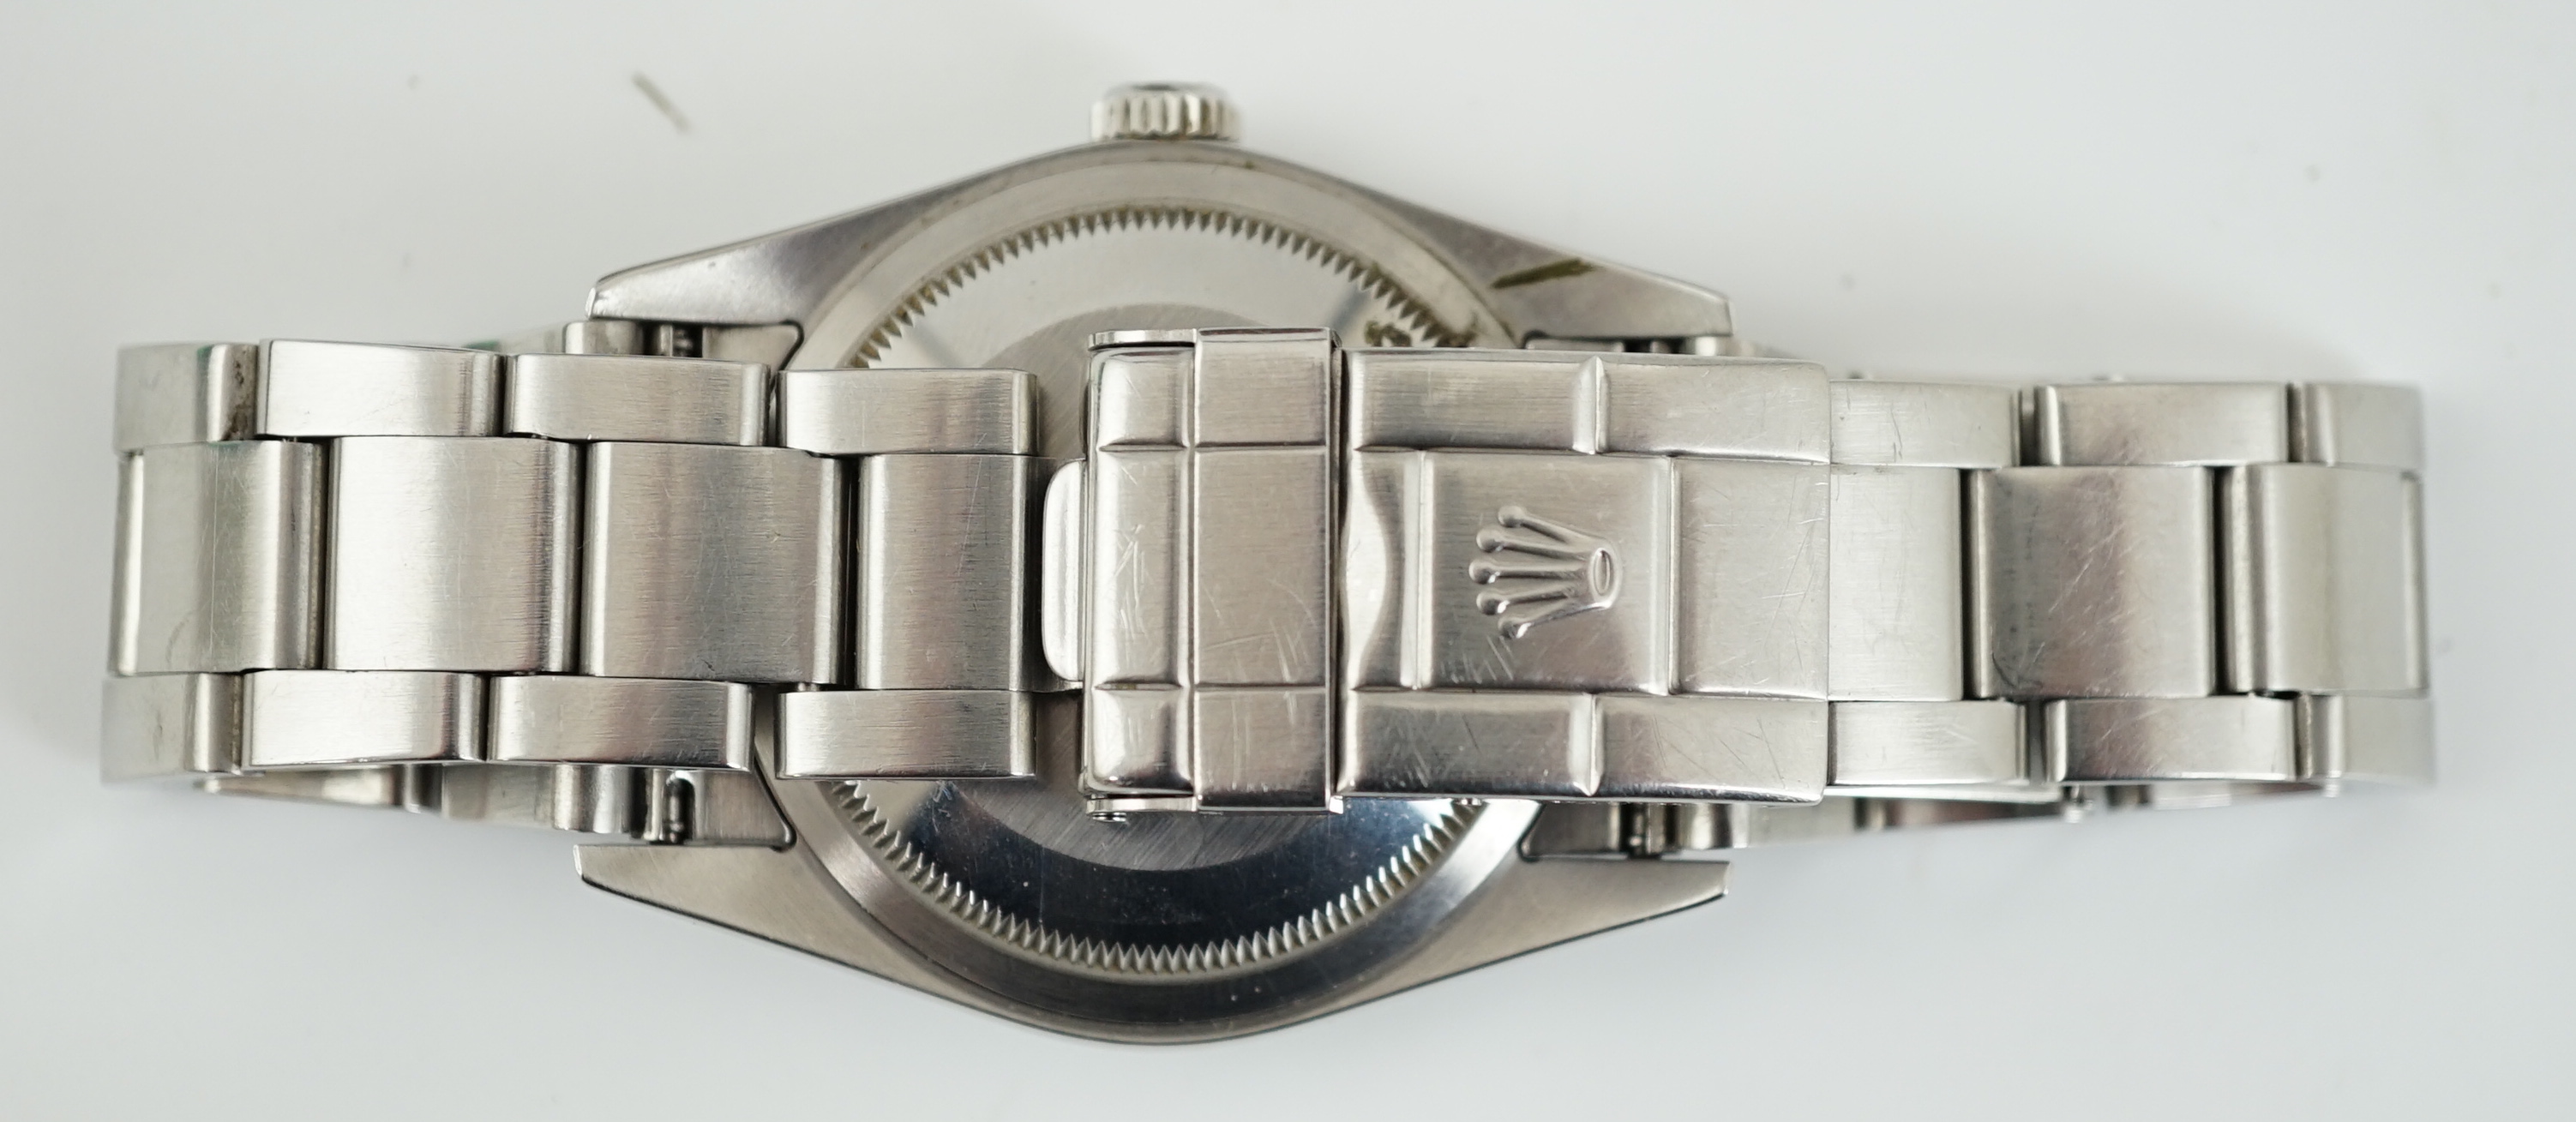 A gentleman's 2004 stainless steel Rolex Oyster Perpetual Explorer wrist watch